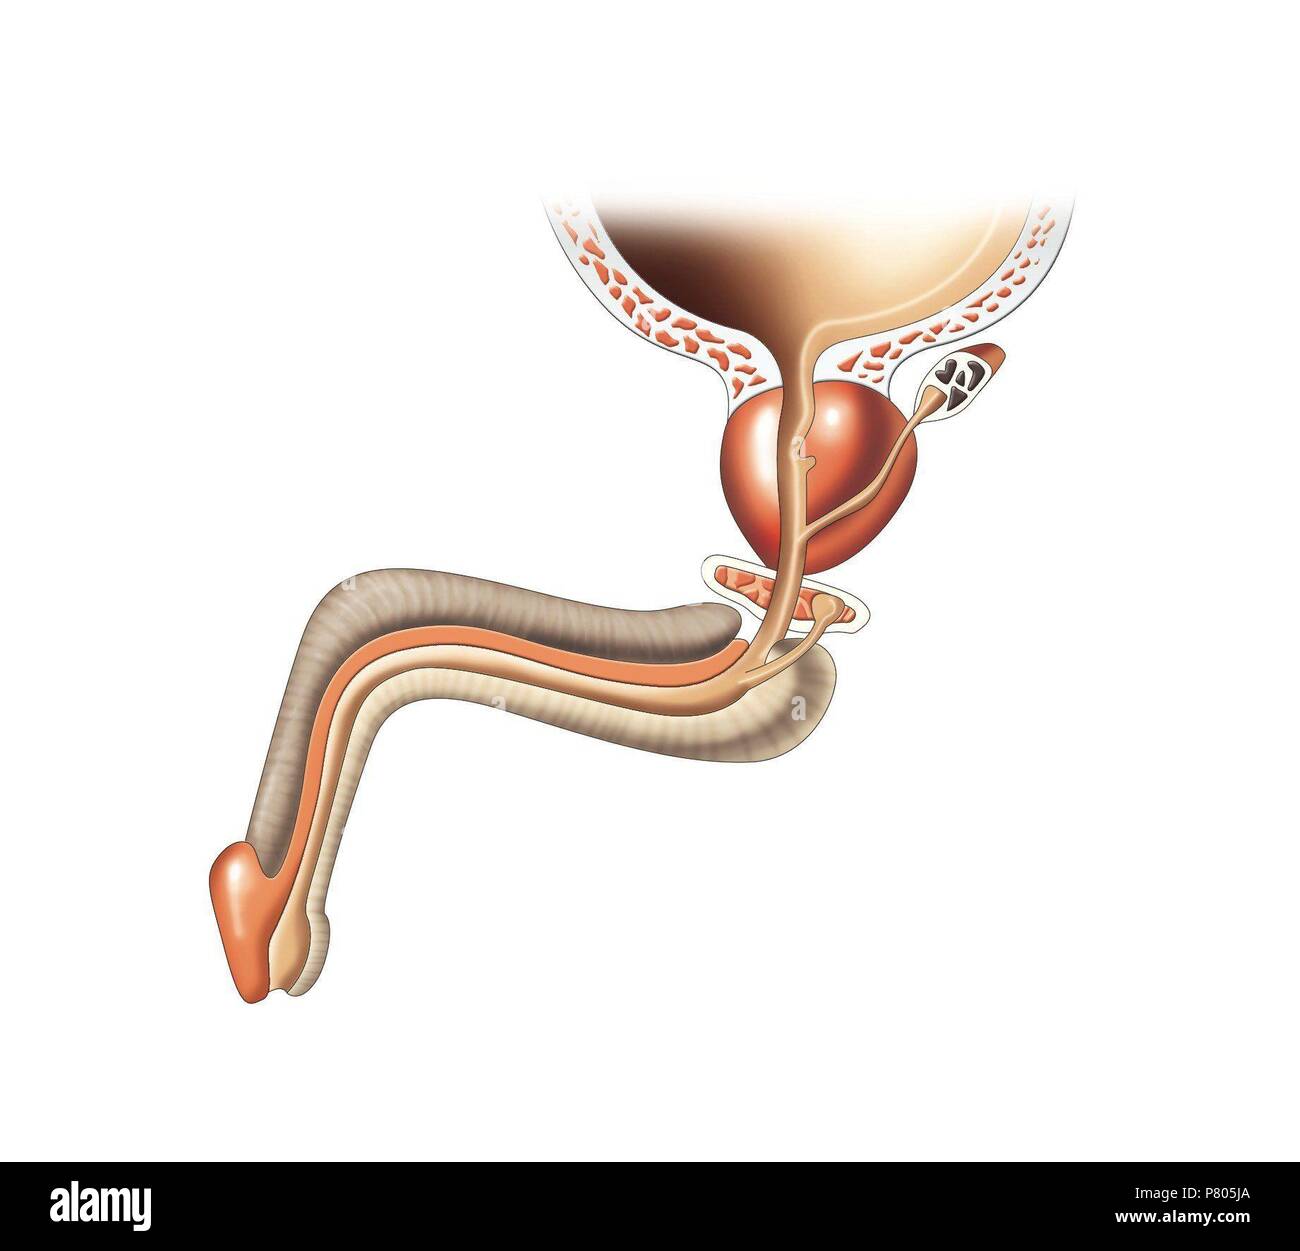 Male urethra. Stock Photo